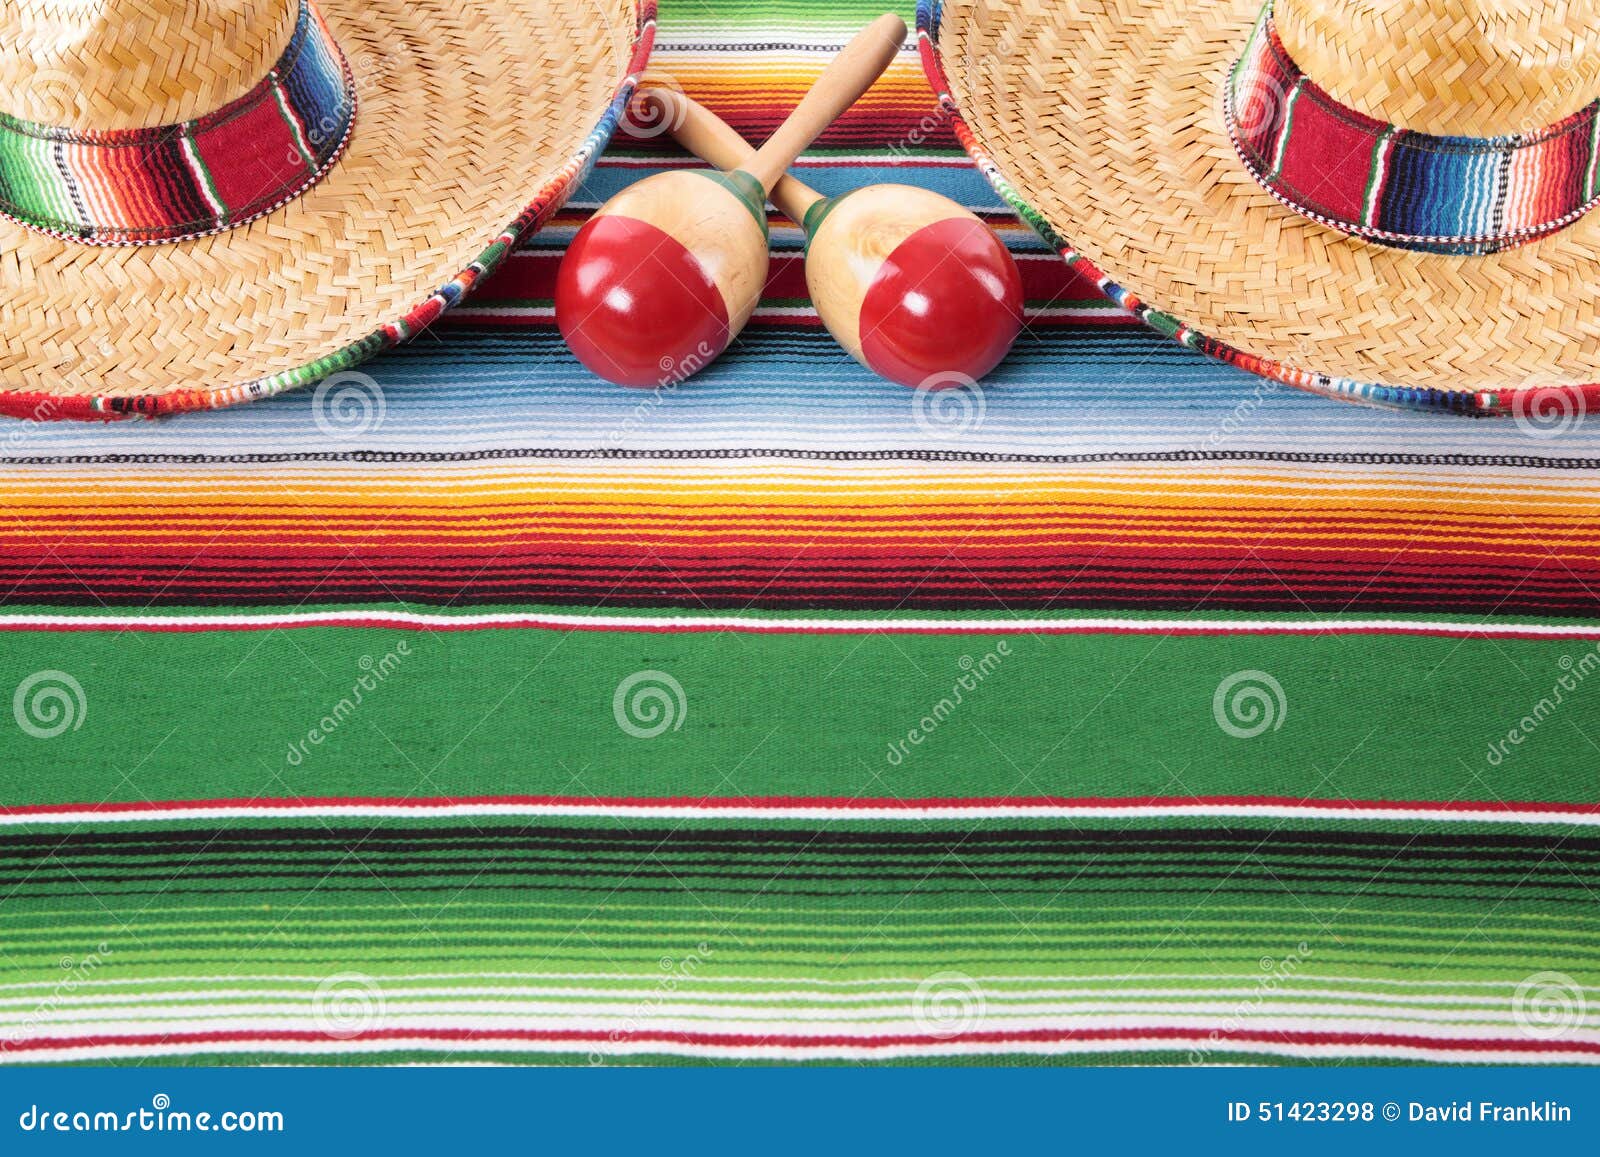 mexico mexican blanket background sombreros maracas copy space